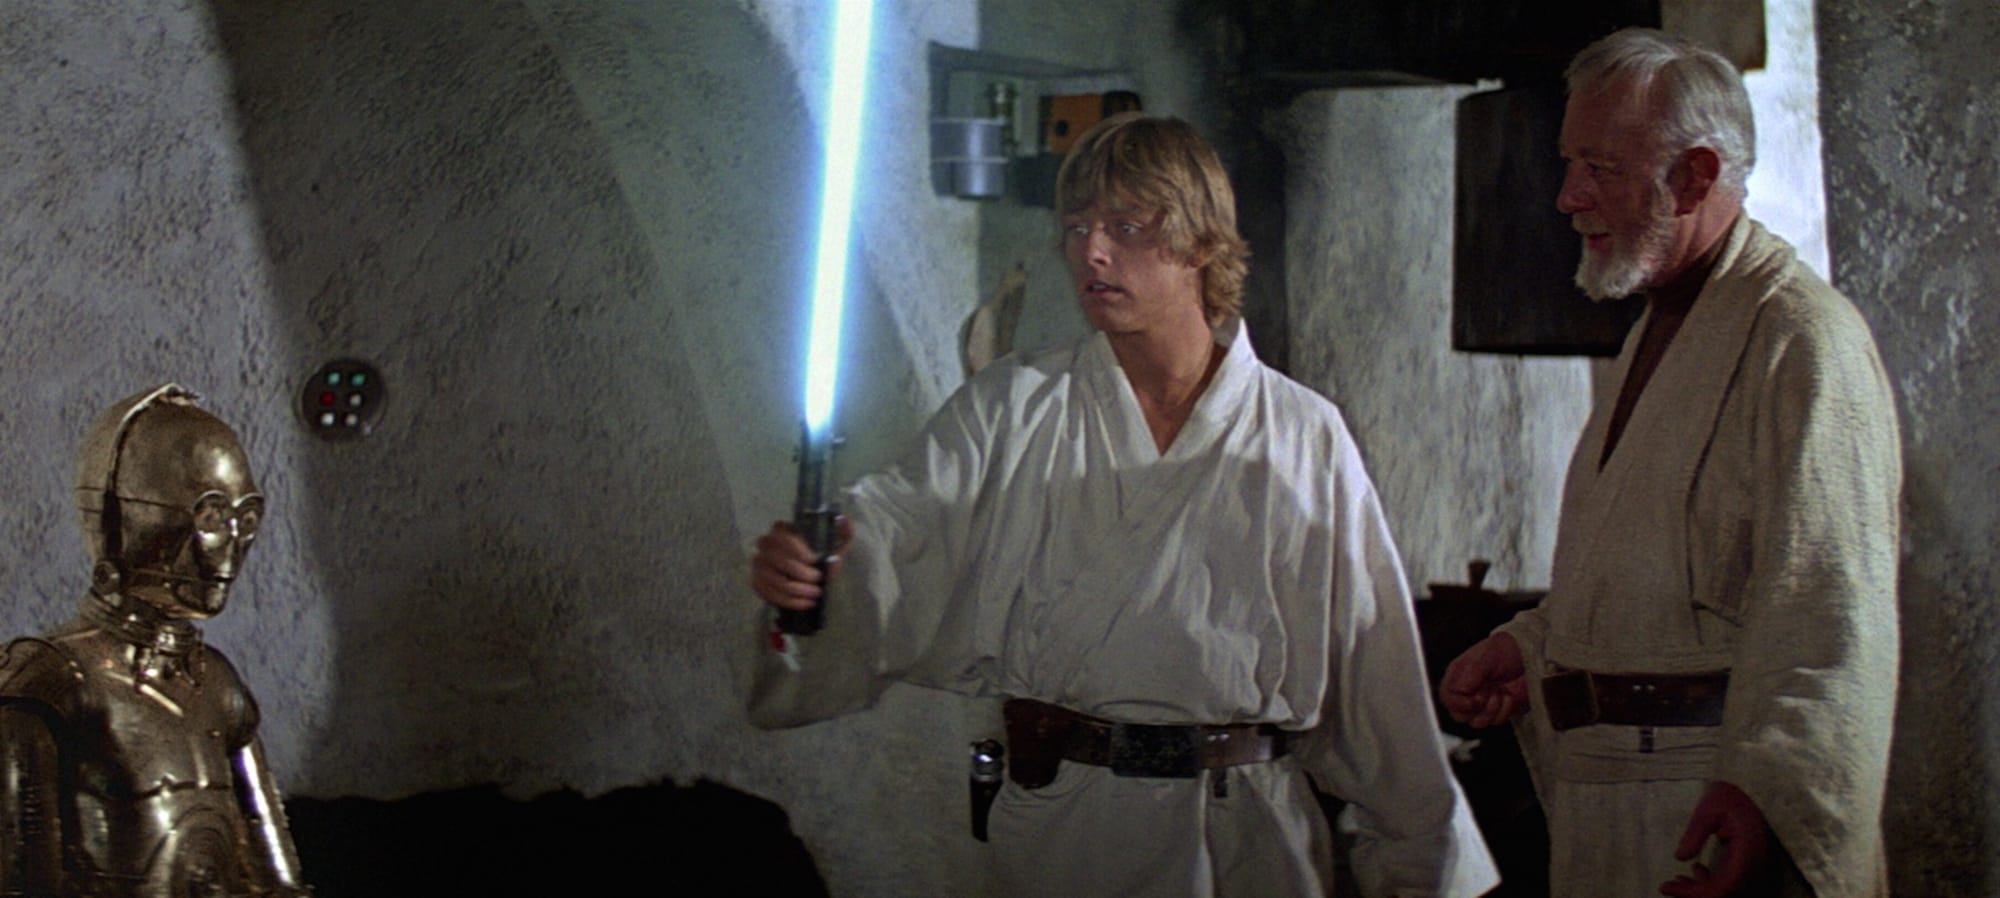 Have $000 lying around? Buy Luke Skywalker's original lightsaber